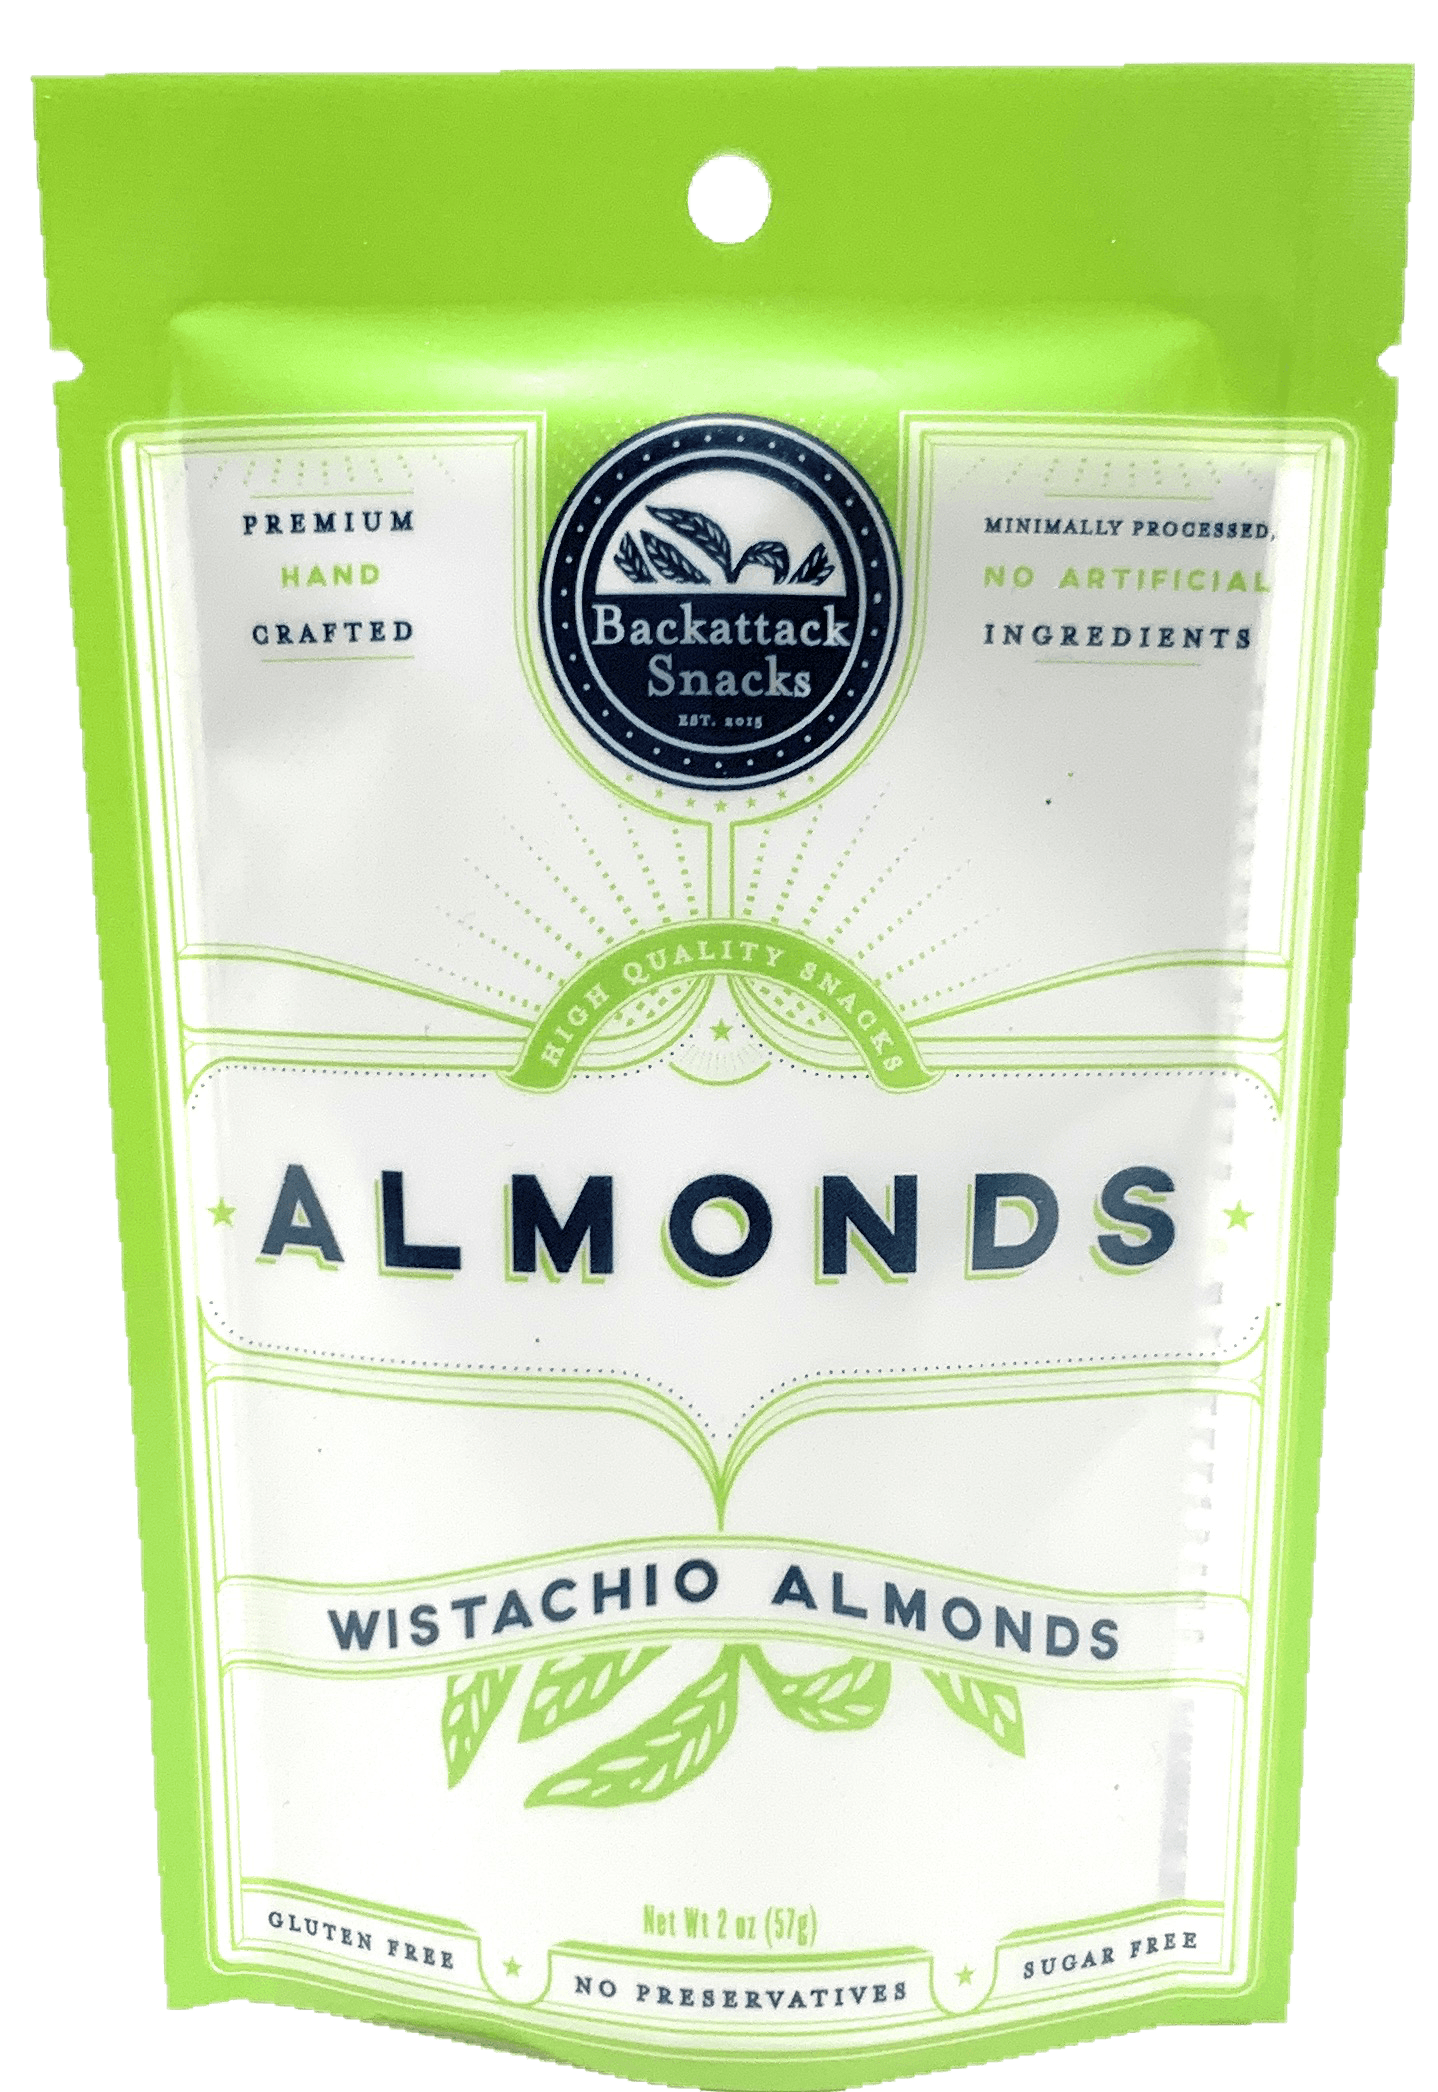 Wistachio Almonds 2oz bag - Backattack Snacks 